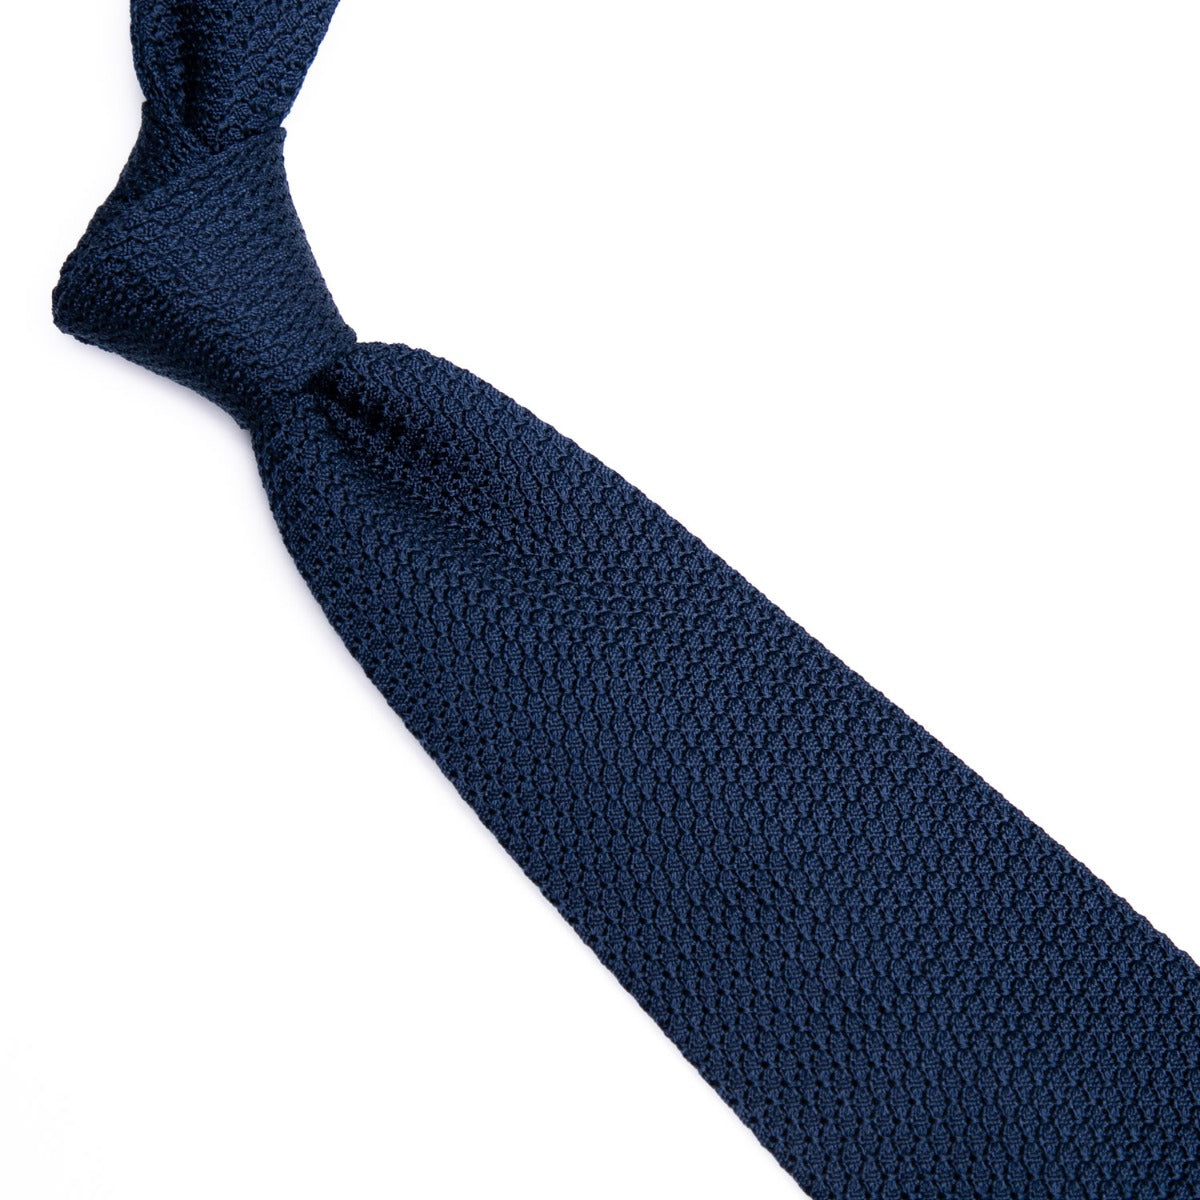 A handmade, highest quality Sovereign Grade Grenadine Grossa Dark Navy tie by KirbyAllison.com, made in the United Kingdom.